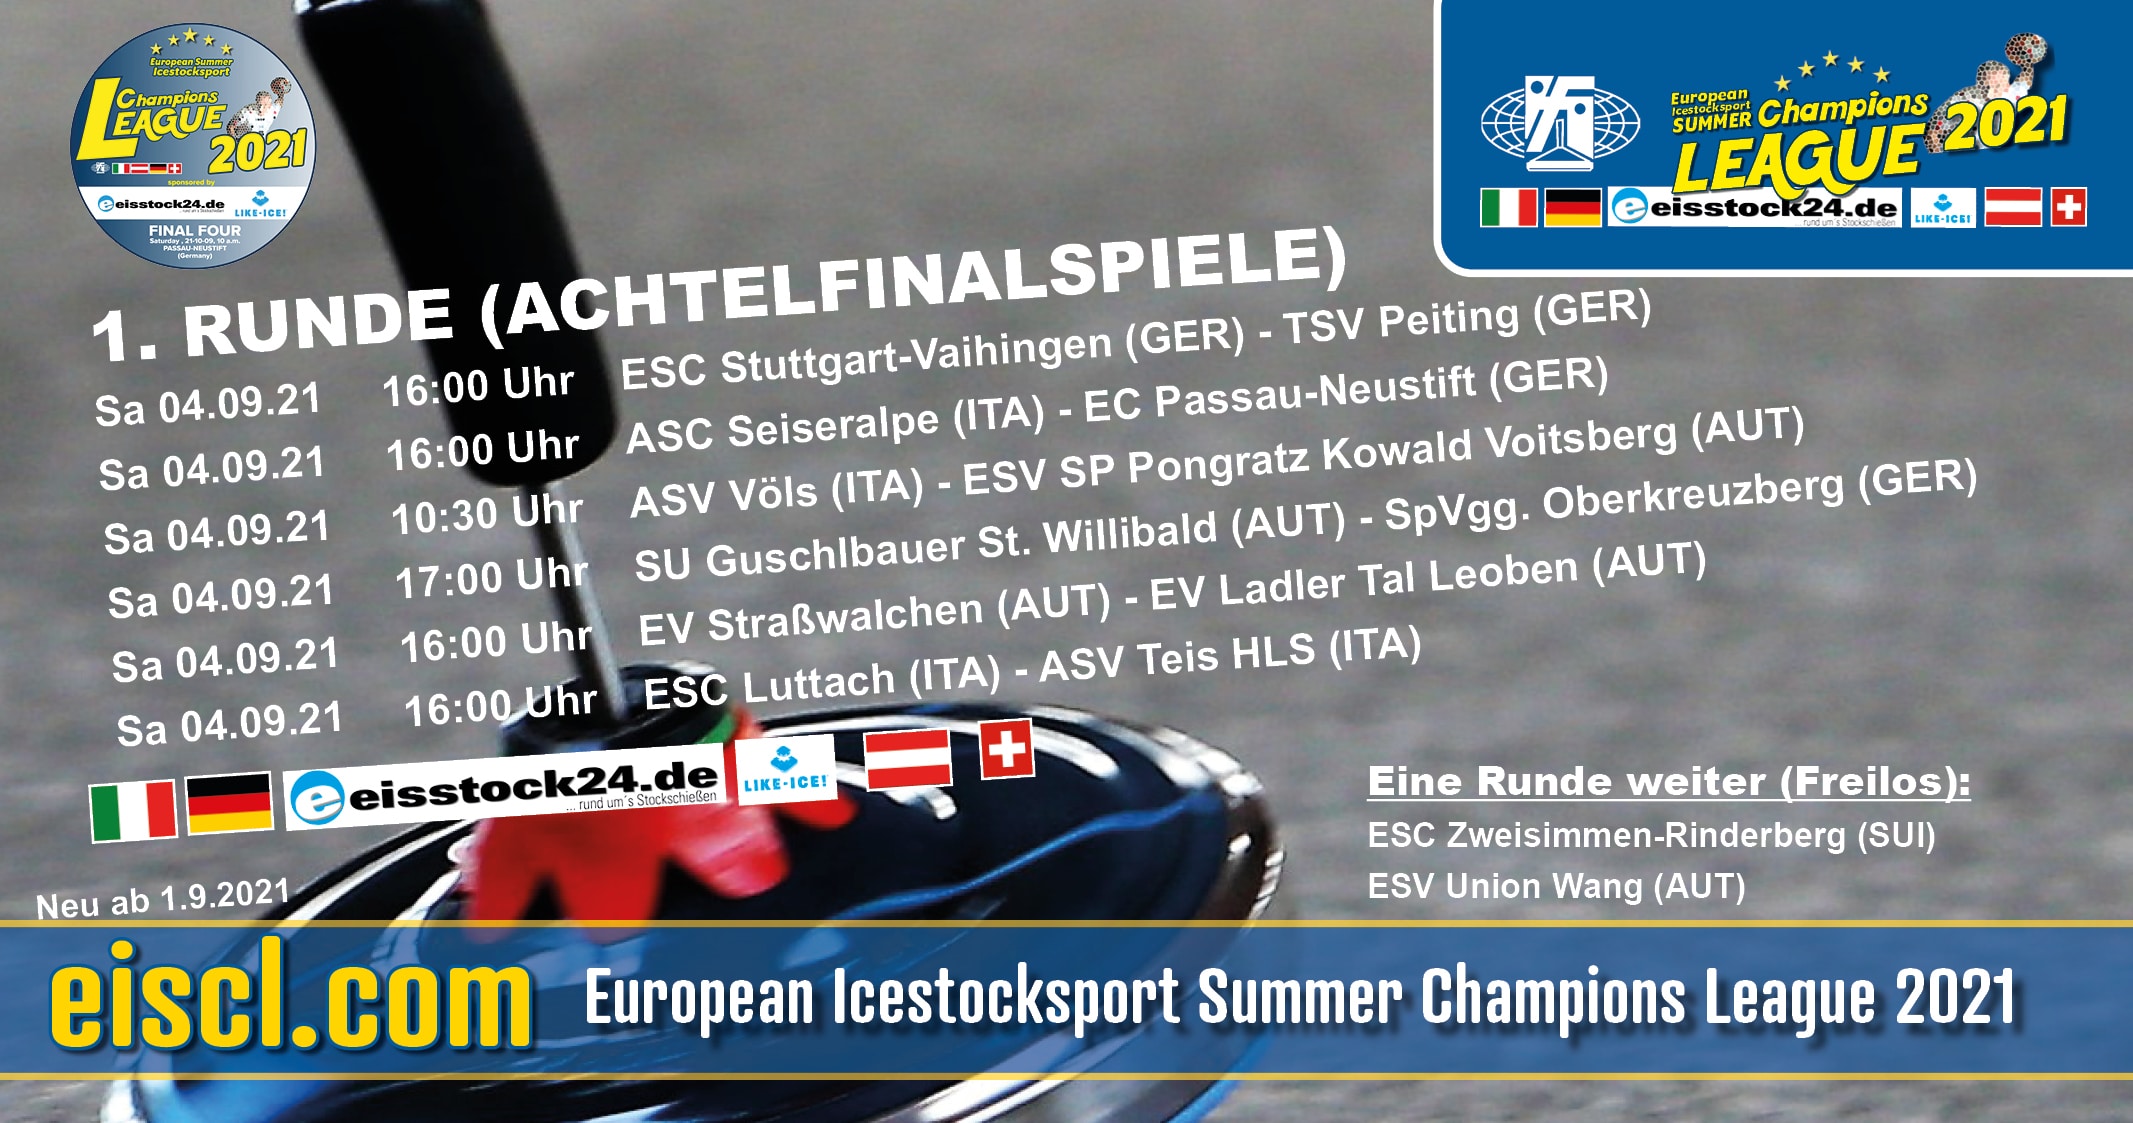 4. European Icestocksport Summer Champions League